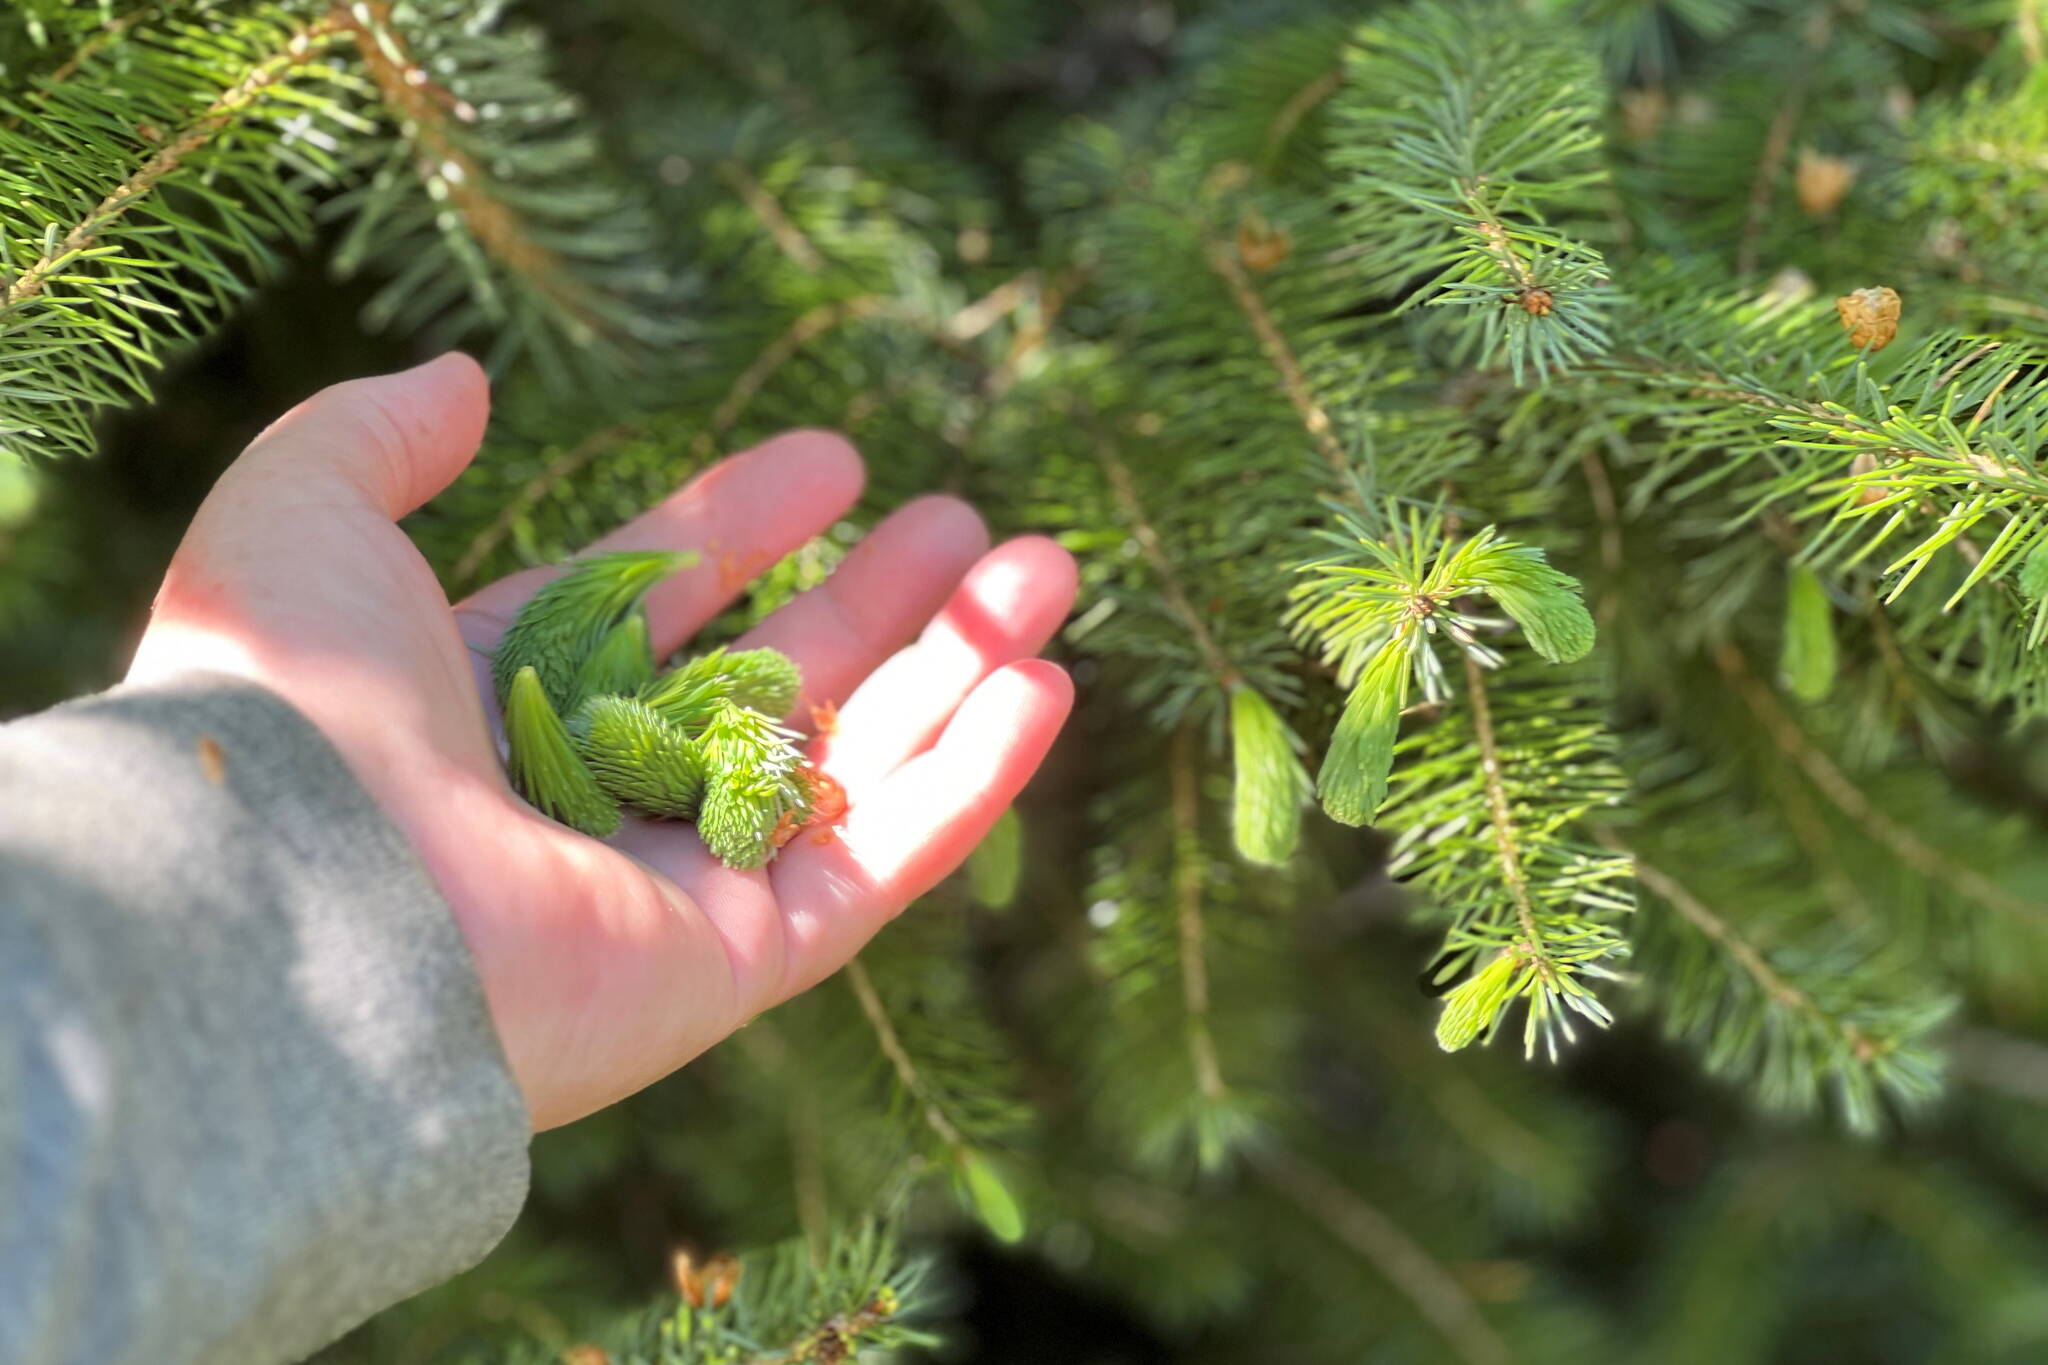 Picking spruce tips in Wrangell. (Photo by Vivian Faith Prescott)